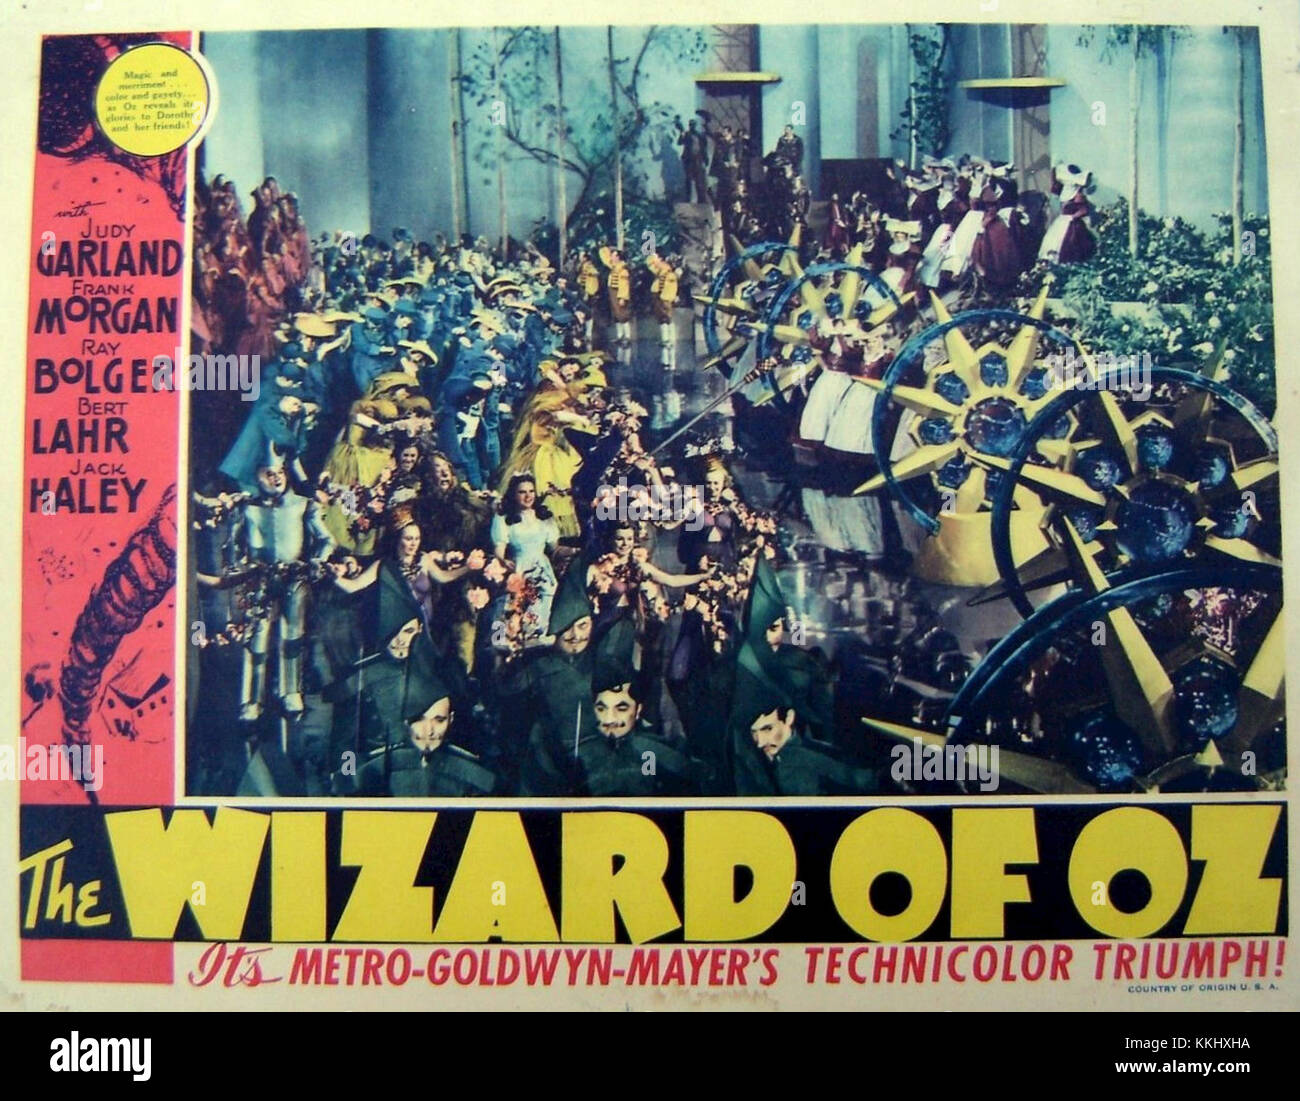 Wizard of Oz lobby card Stock Photo